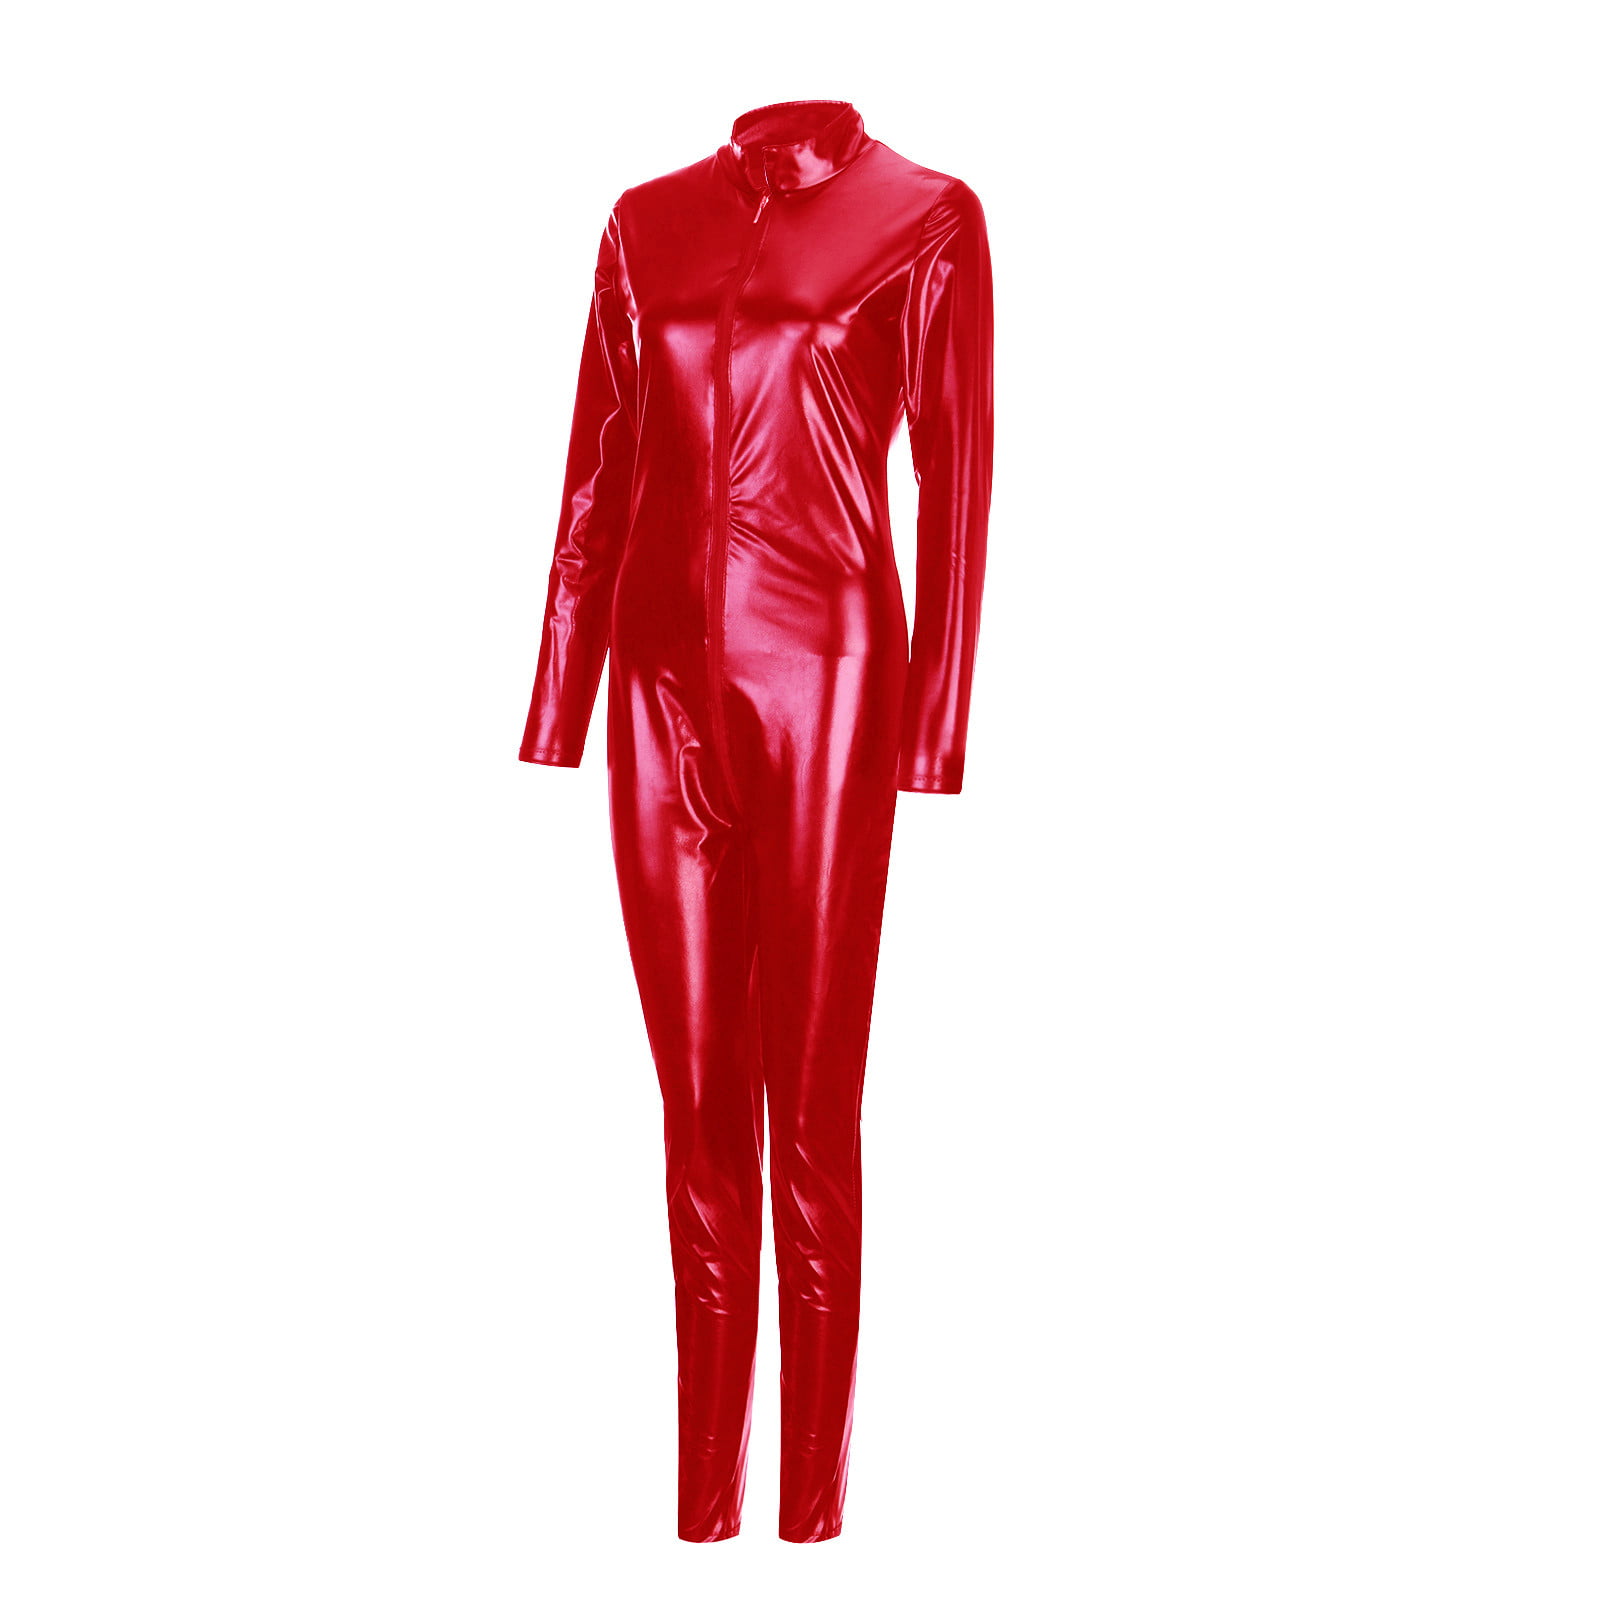 Red Jumpsuit Apparatus - Don't You Fake It Red/Black Splatter Signed Vinyl  LP | eBay